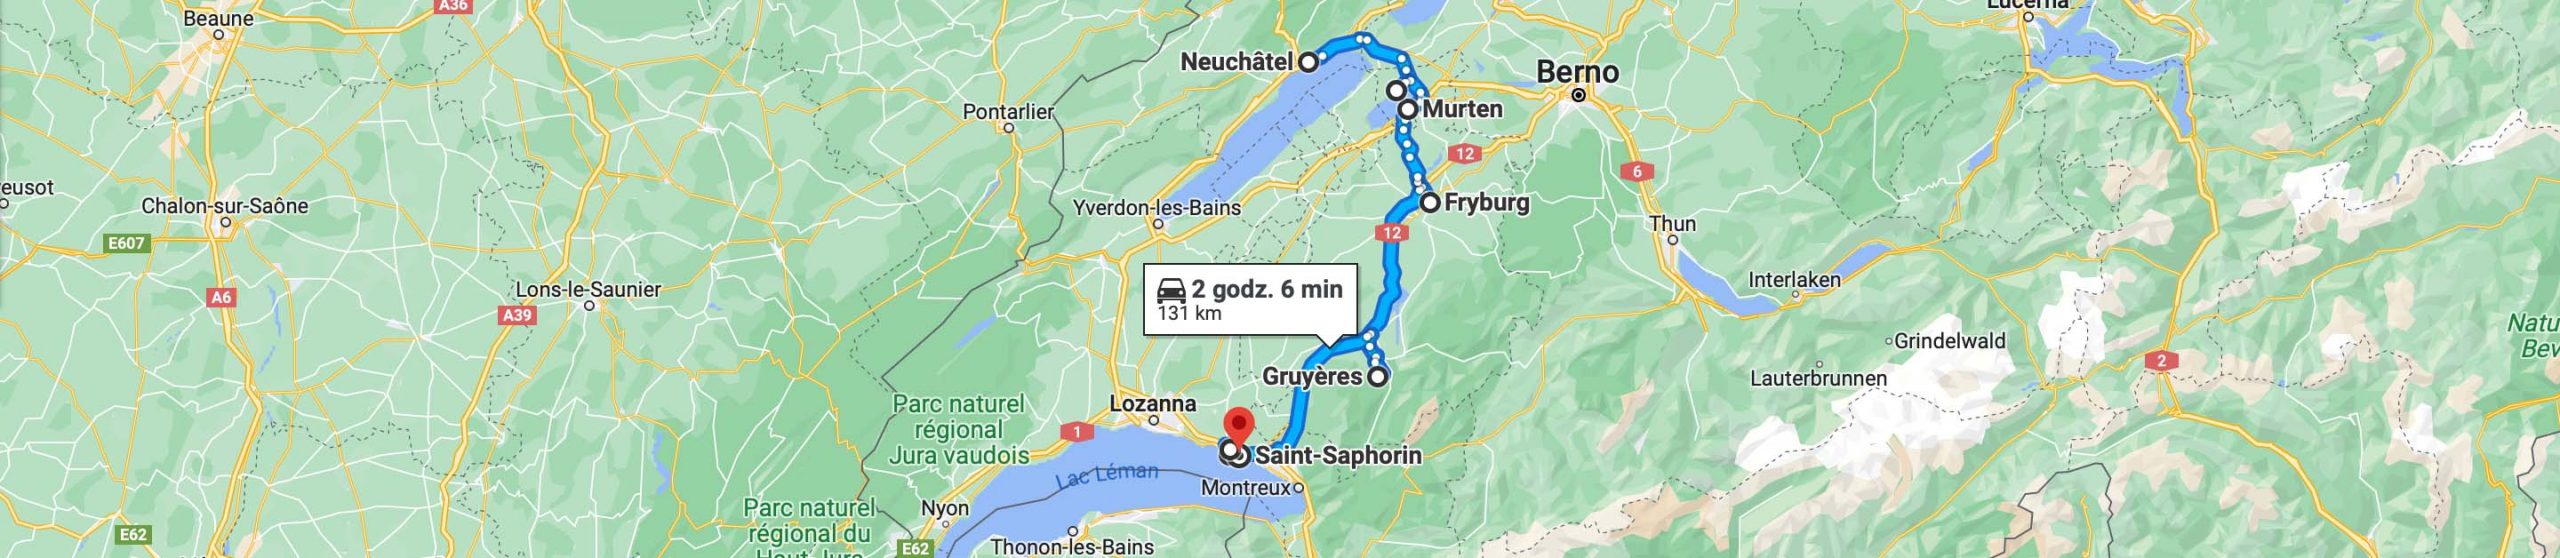 Trasa: Neuchâtel - Chexbres (Lavaux)